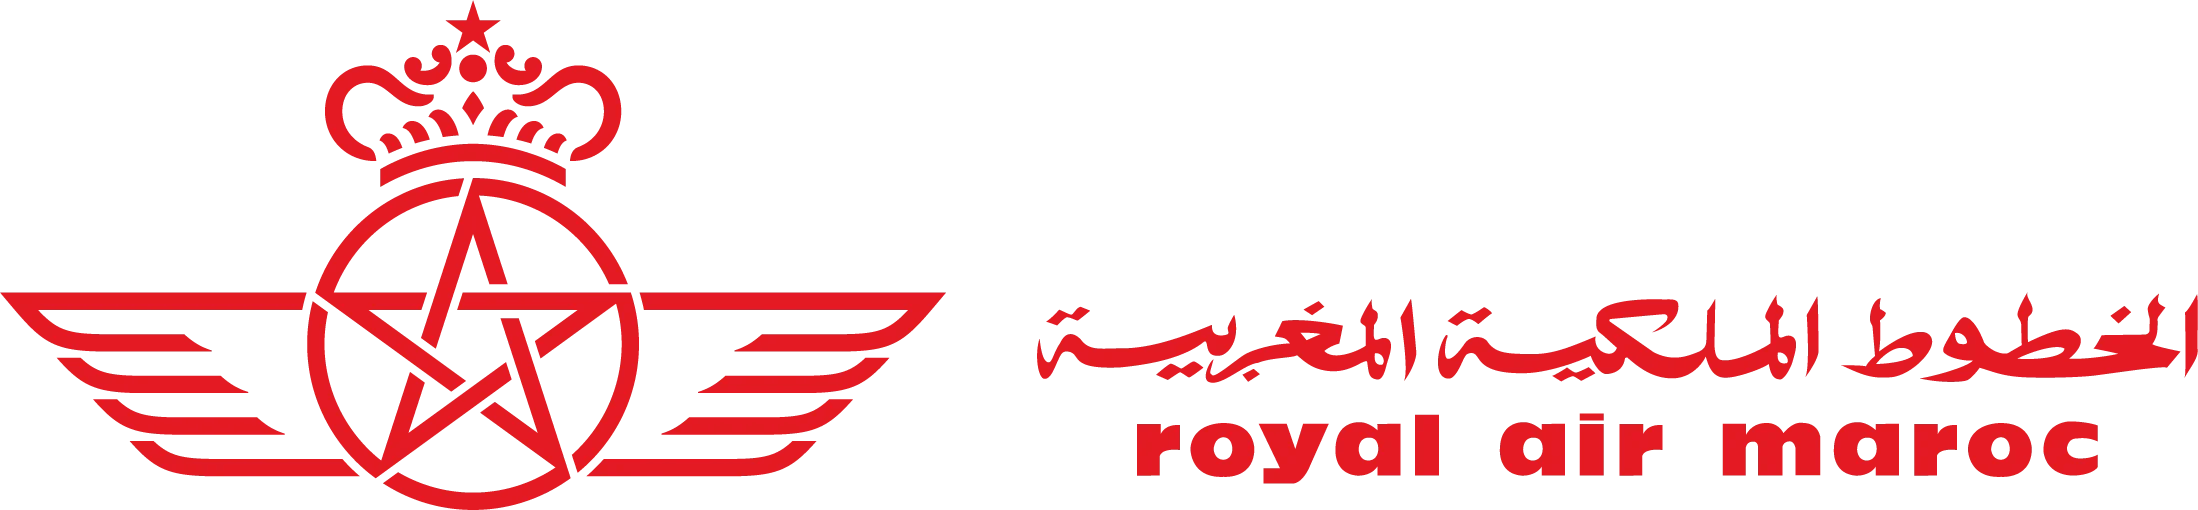 Royal Air Maroc Oneworld Member Airline Oneworld